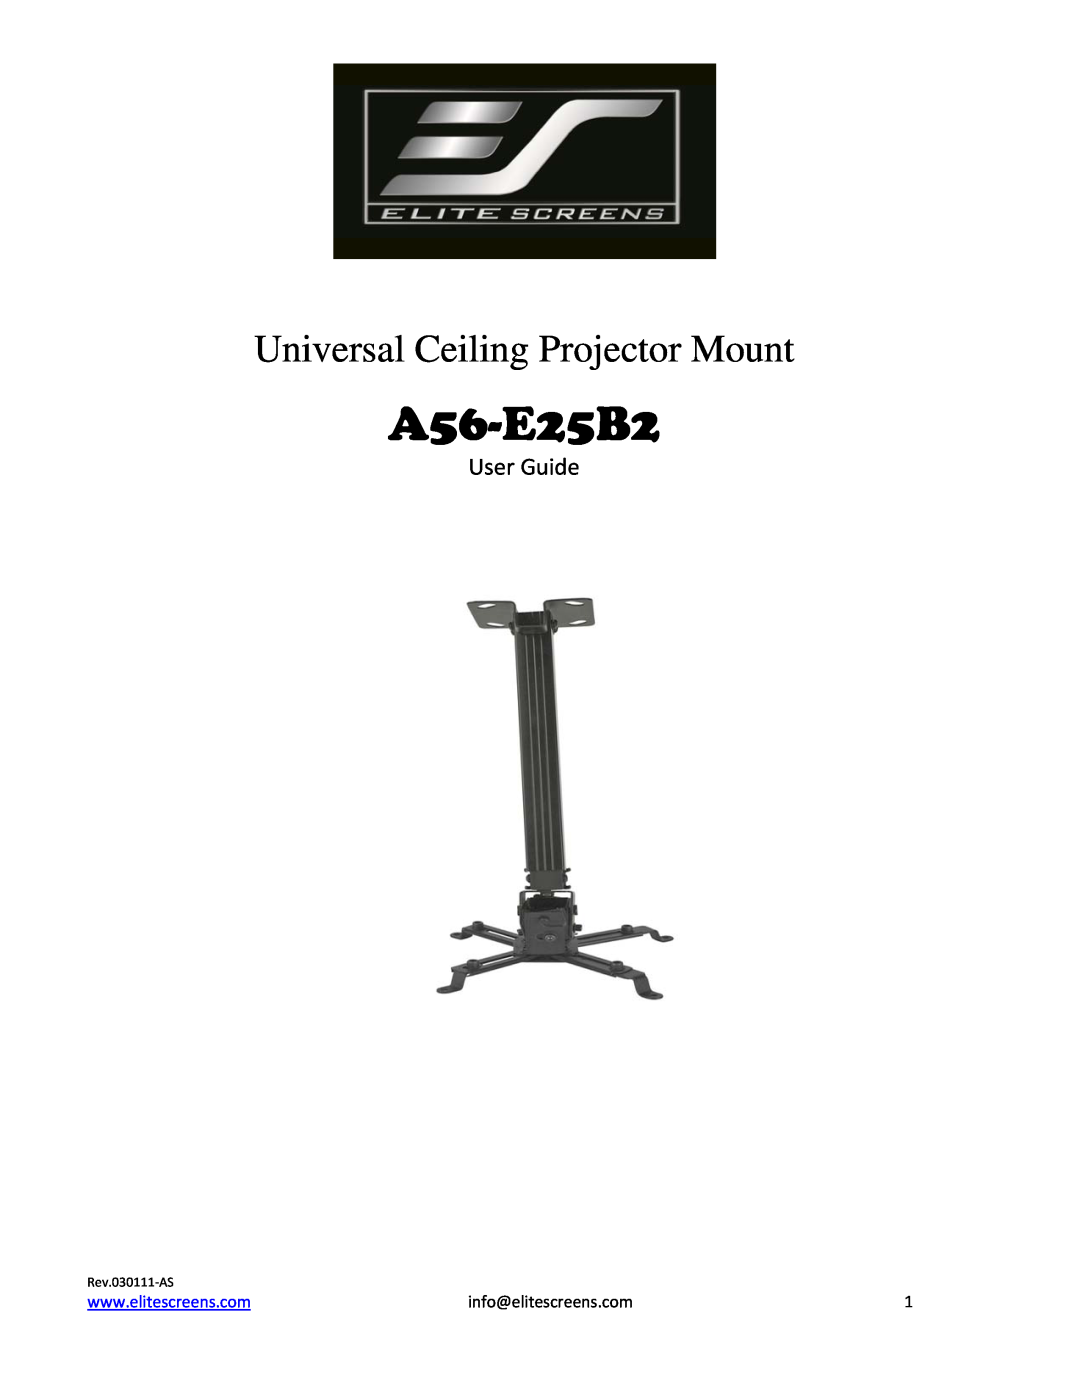 Elite Screens A56-E25B2 manual Universal Ceiling Projector Mount, User Guide, info@elitescreens.com 